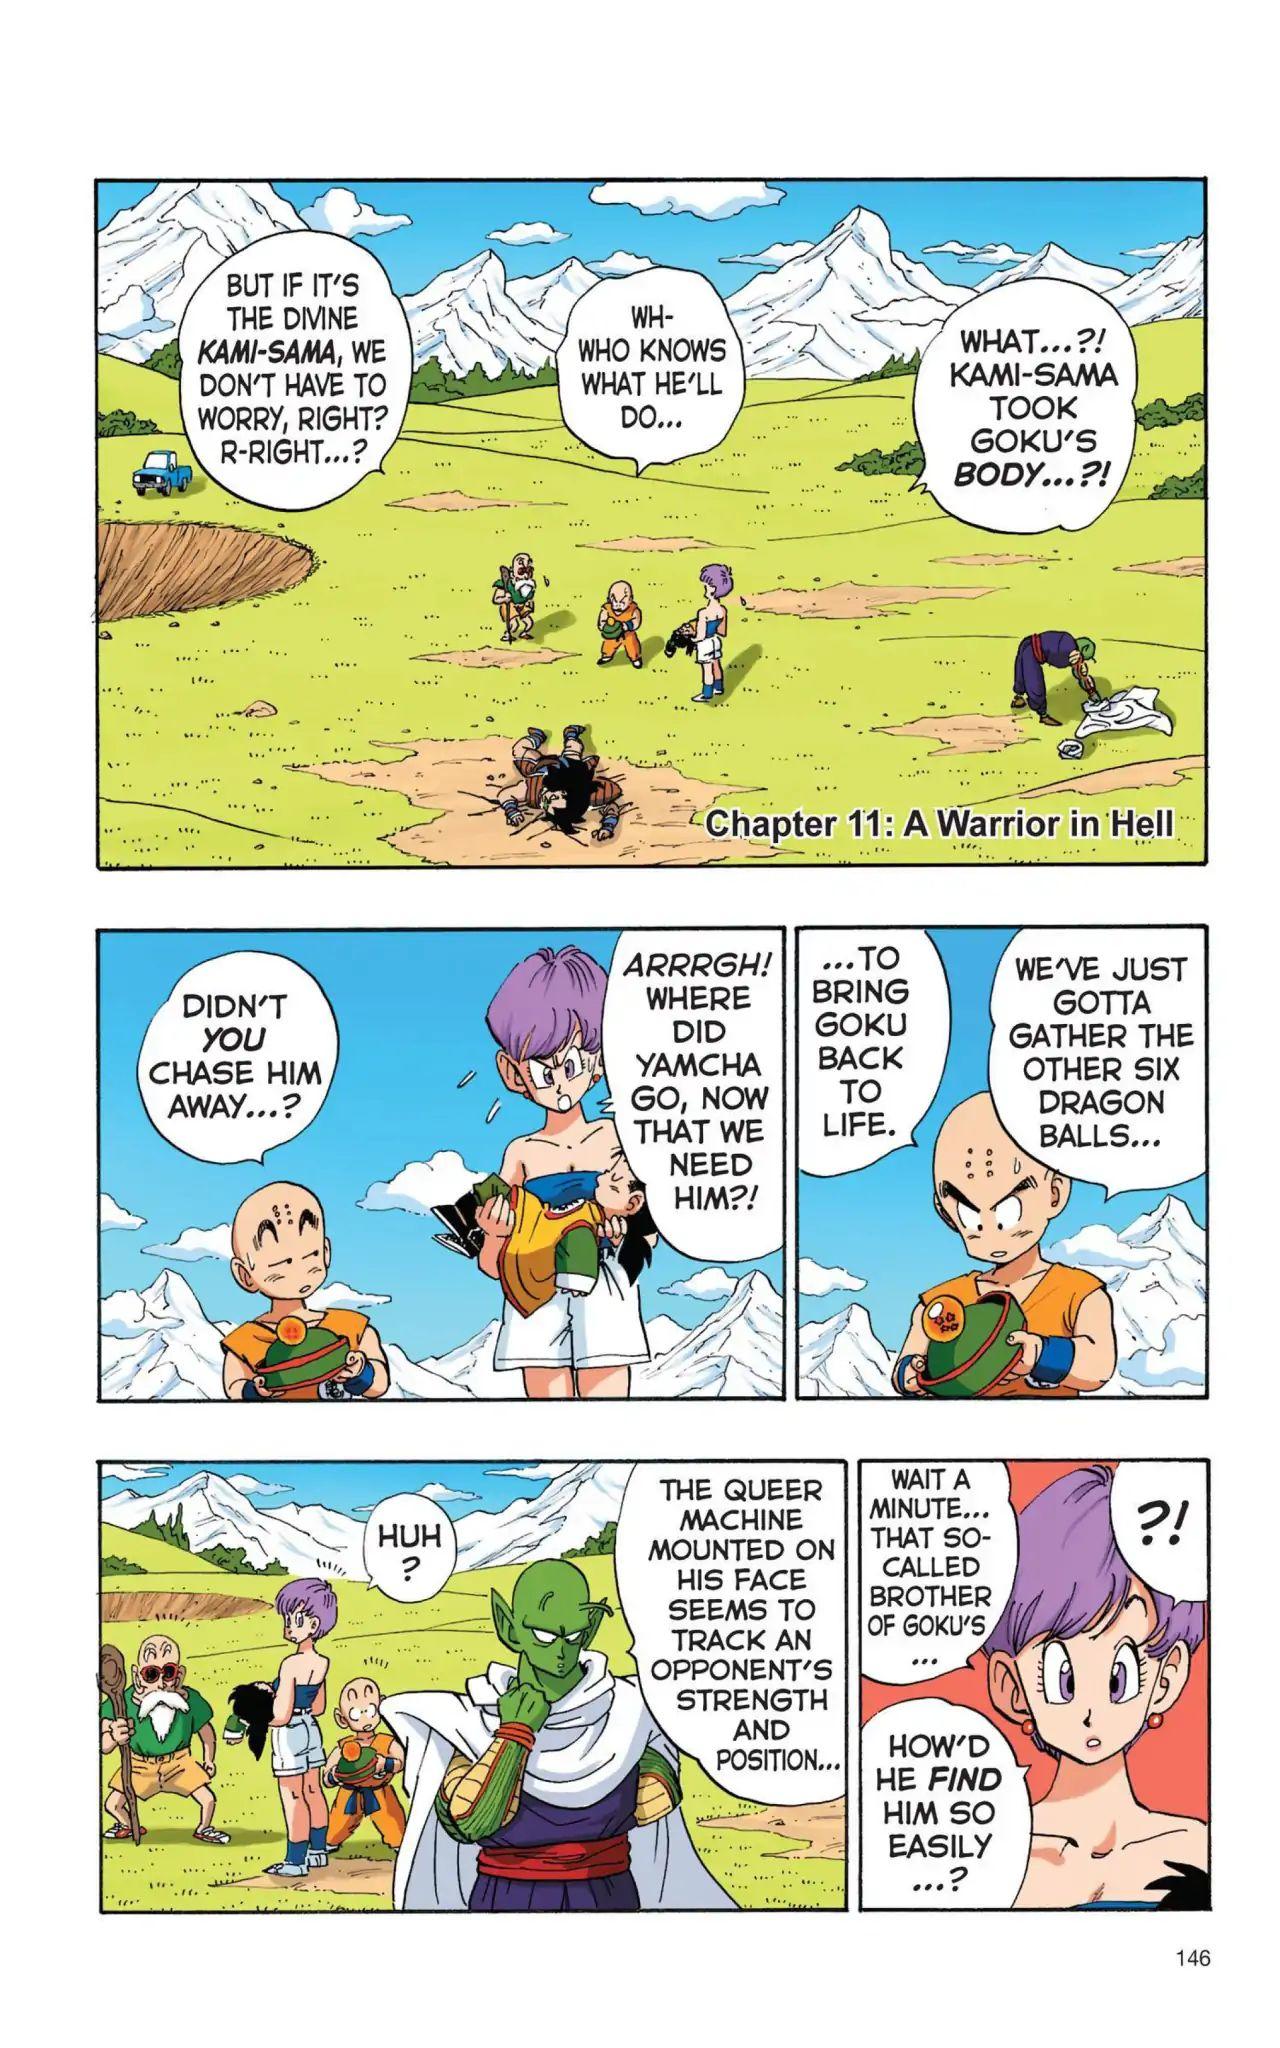 Dragon Ball Full Color Saiyan Arc' Is Toriyama Manga At Its Best